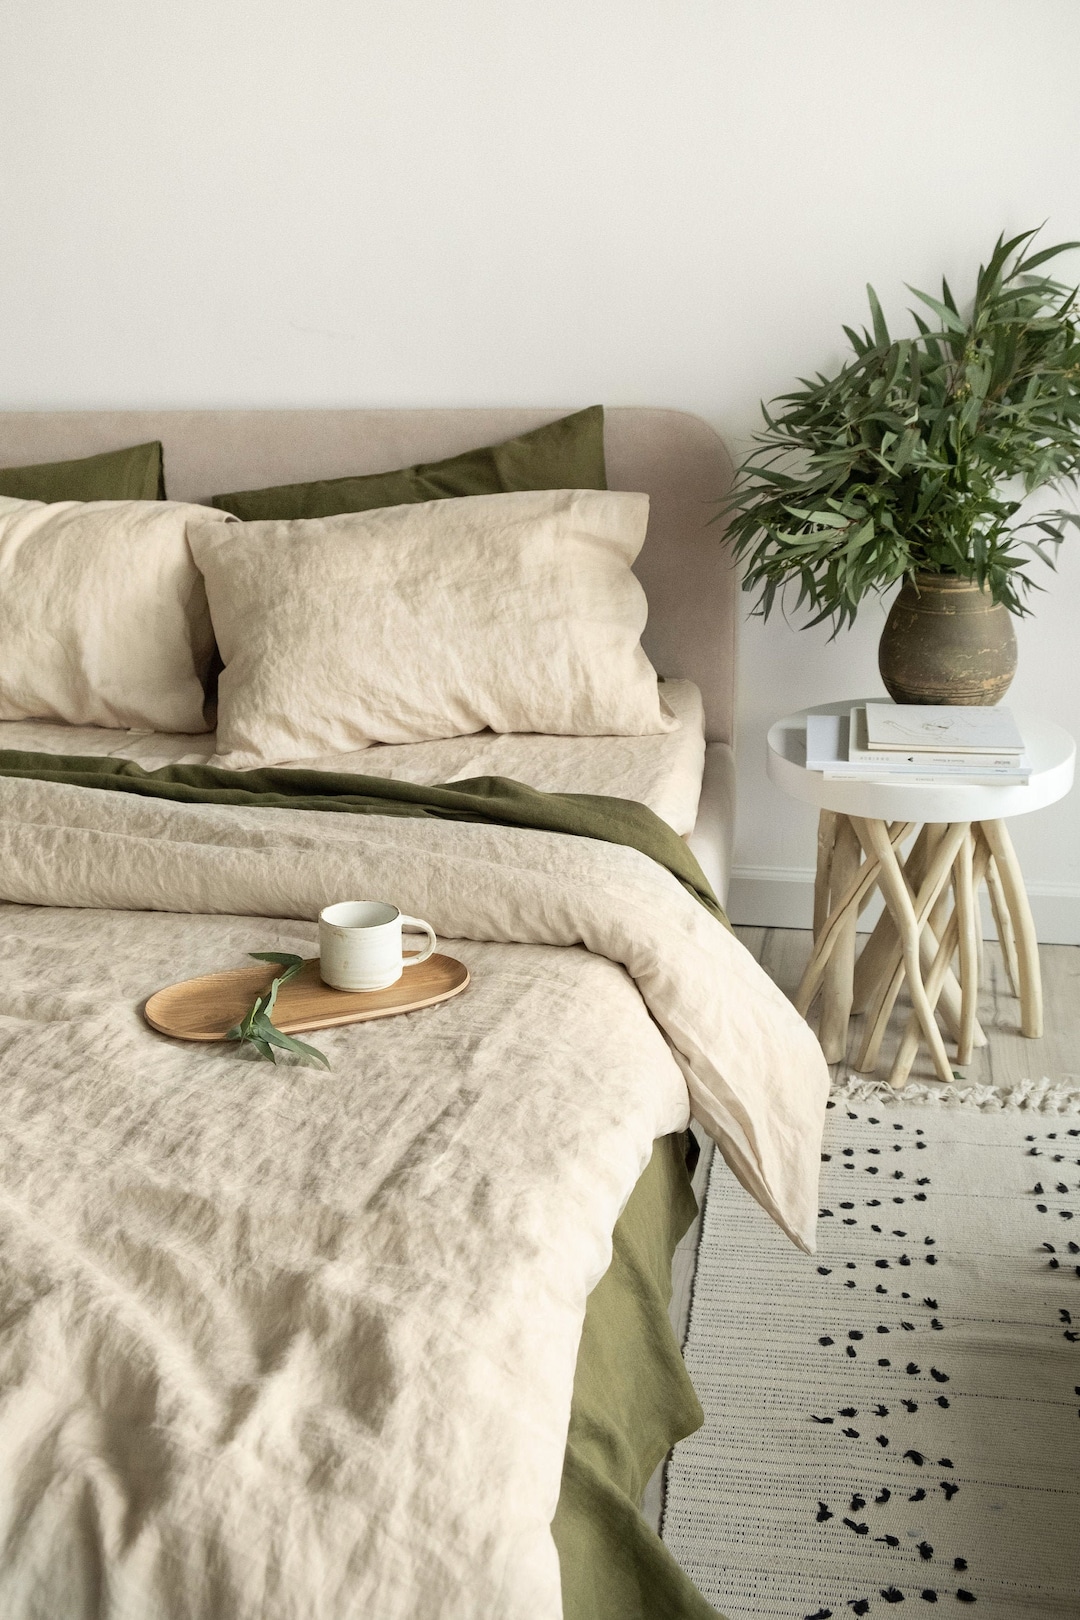 3 Piece Linen Bedding Set in Light Beige Color / Linen Duvet Cover